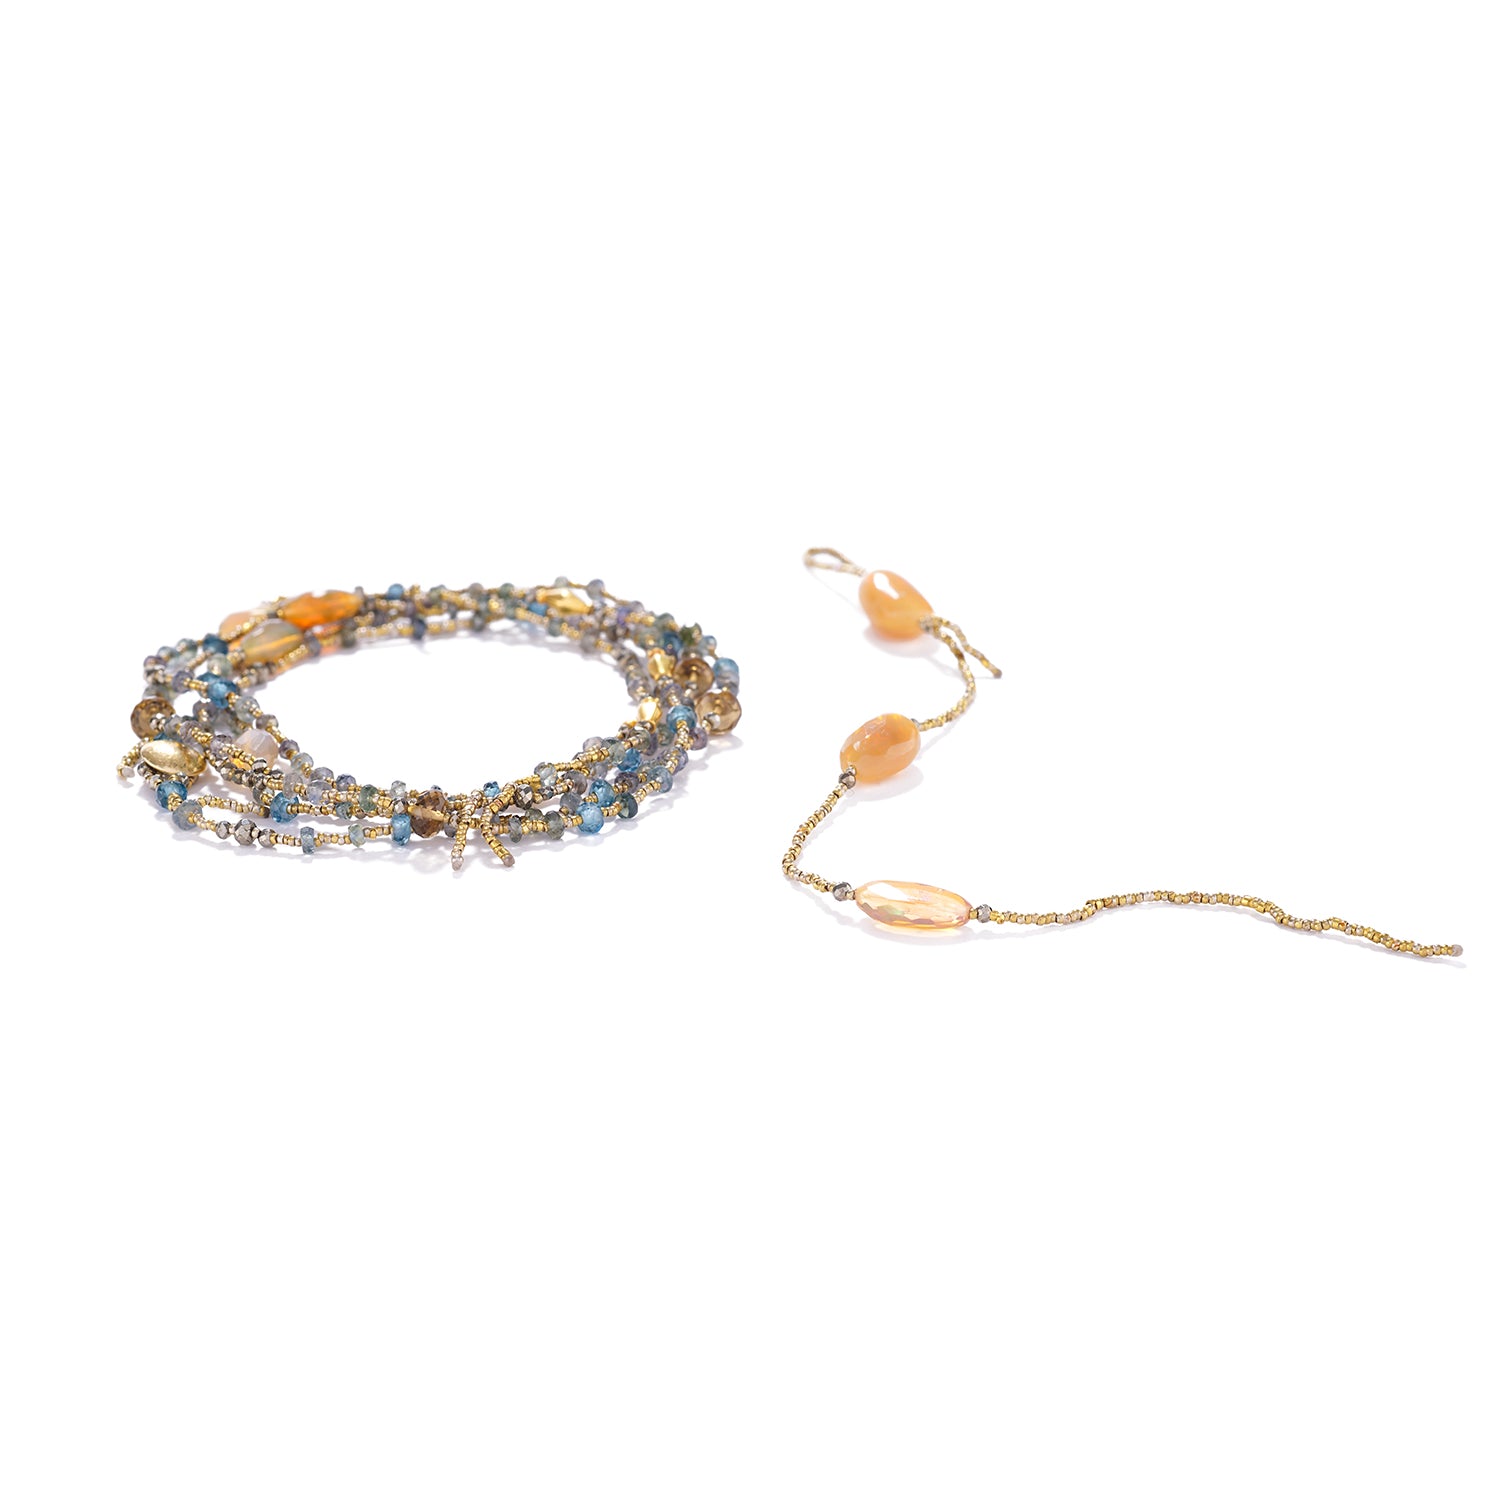 Opal and Gemstone Necklace/Bracelet